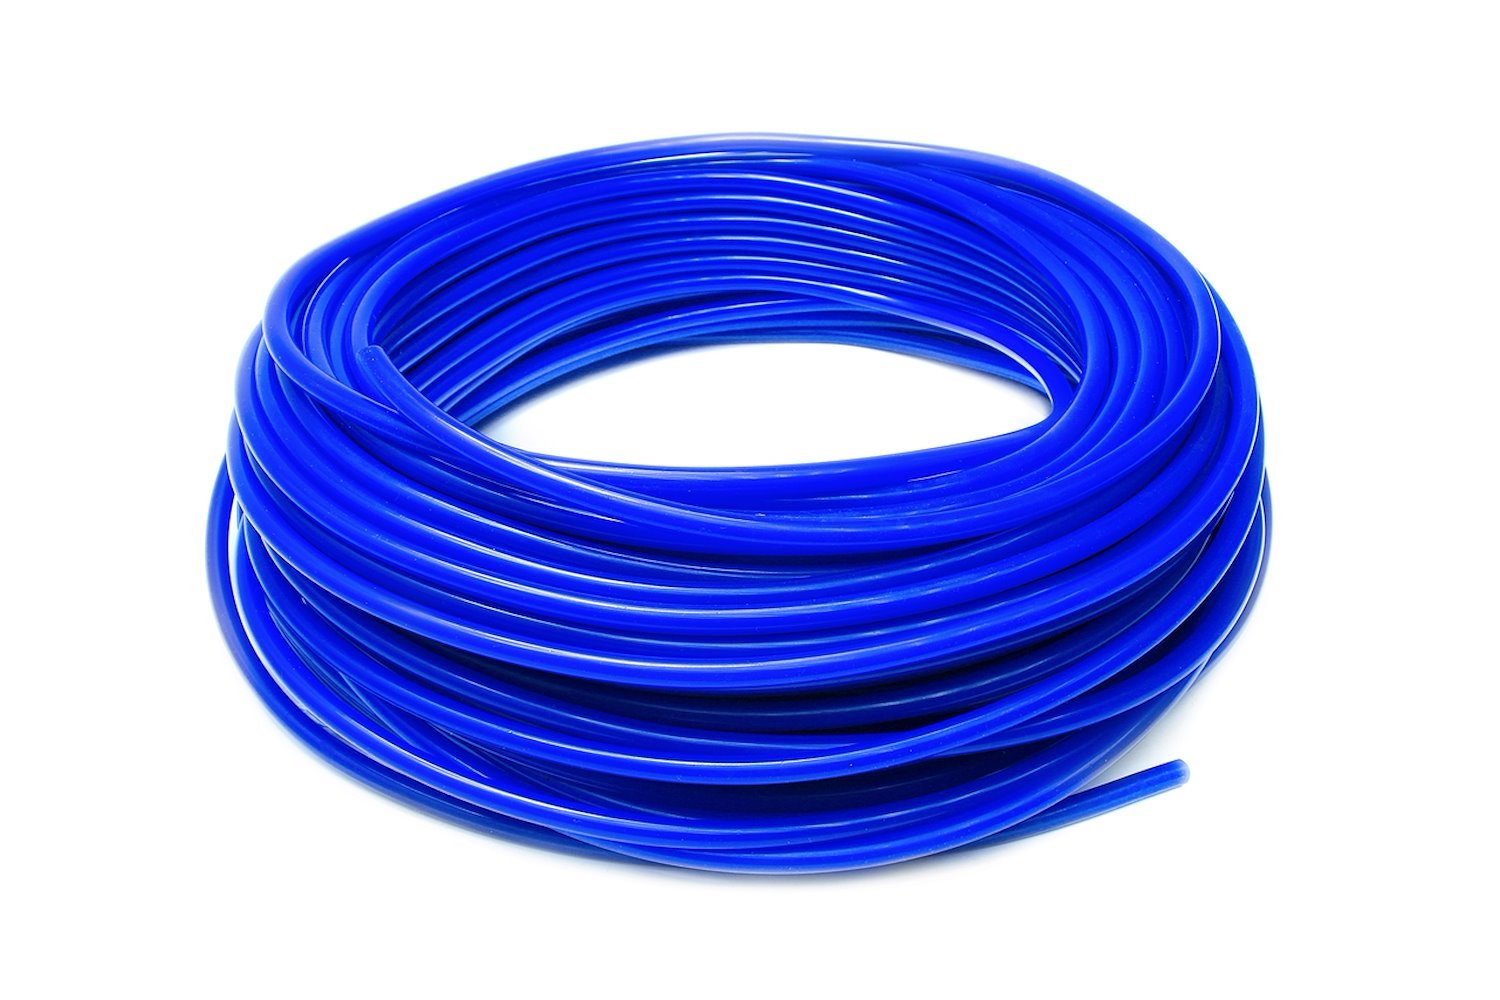 HTSVH3TW-BLUEx50 High-Temperature Silicone Vacuum Hose Tubing, 1/8 in. ID, 50 ft. Roll, Blue